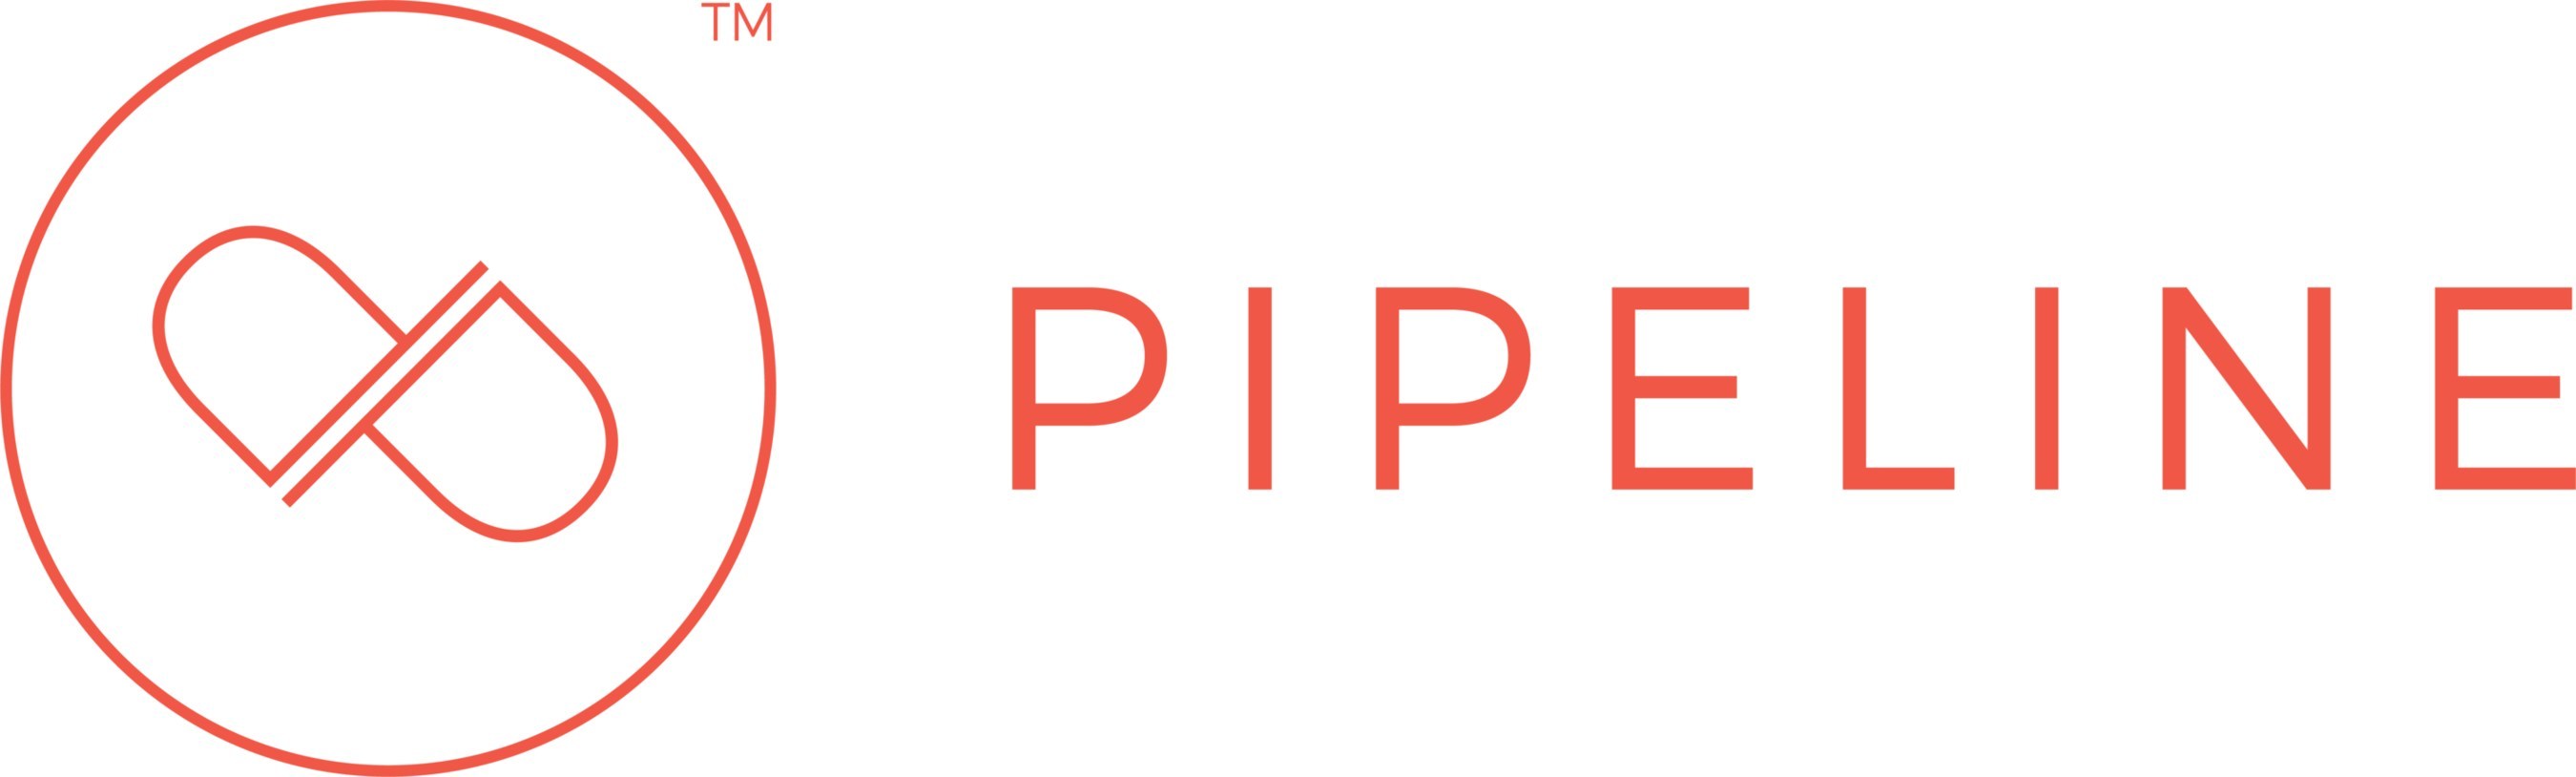 Pipeline_Vector_Logo